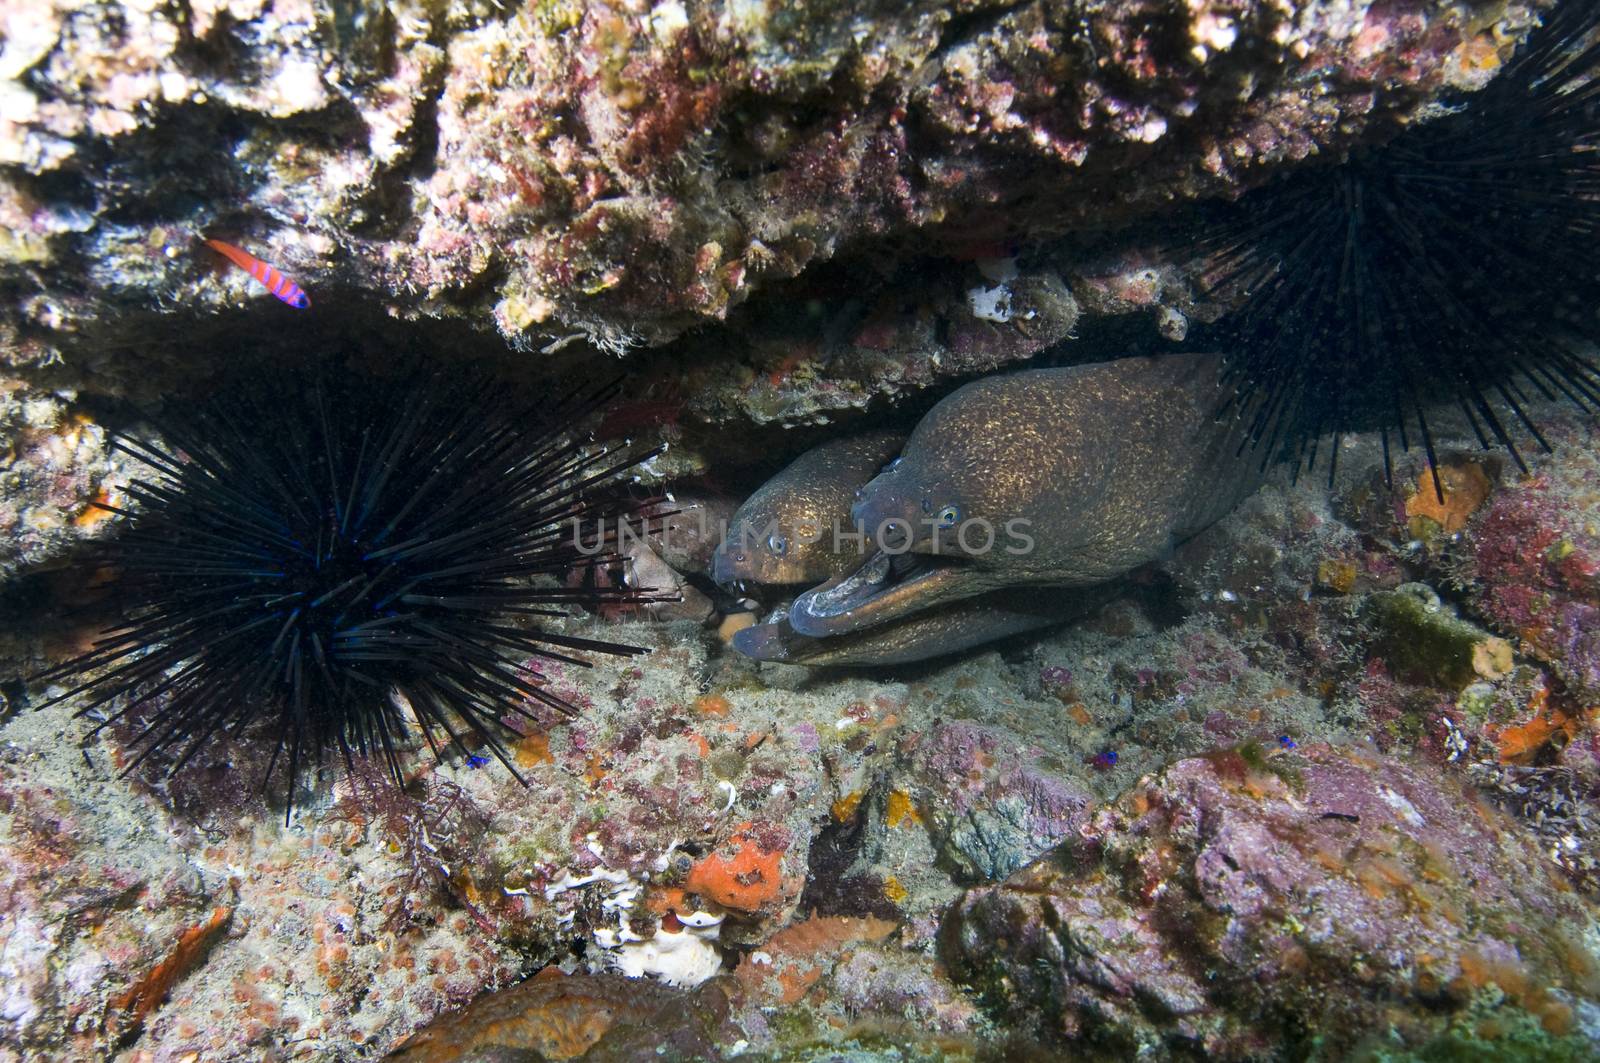 California moray eels (Gymnoyhorax mordax), up to 5ft. "Corey Cormorant Rock", 33°24.777 N 138°28.334 W